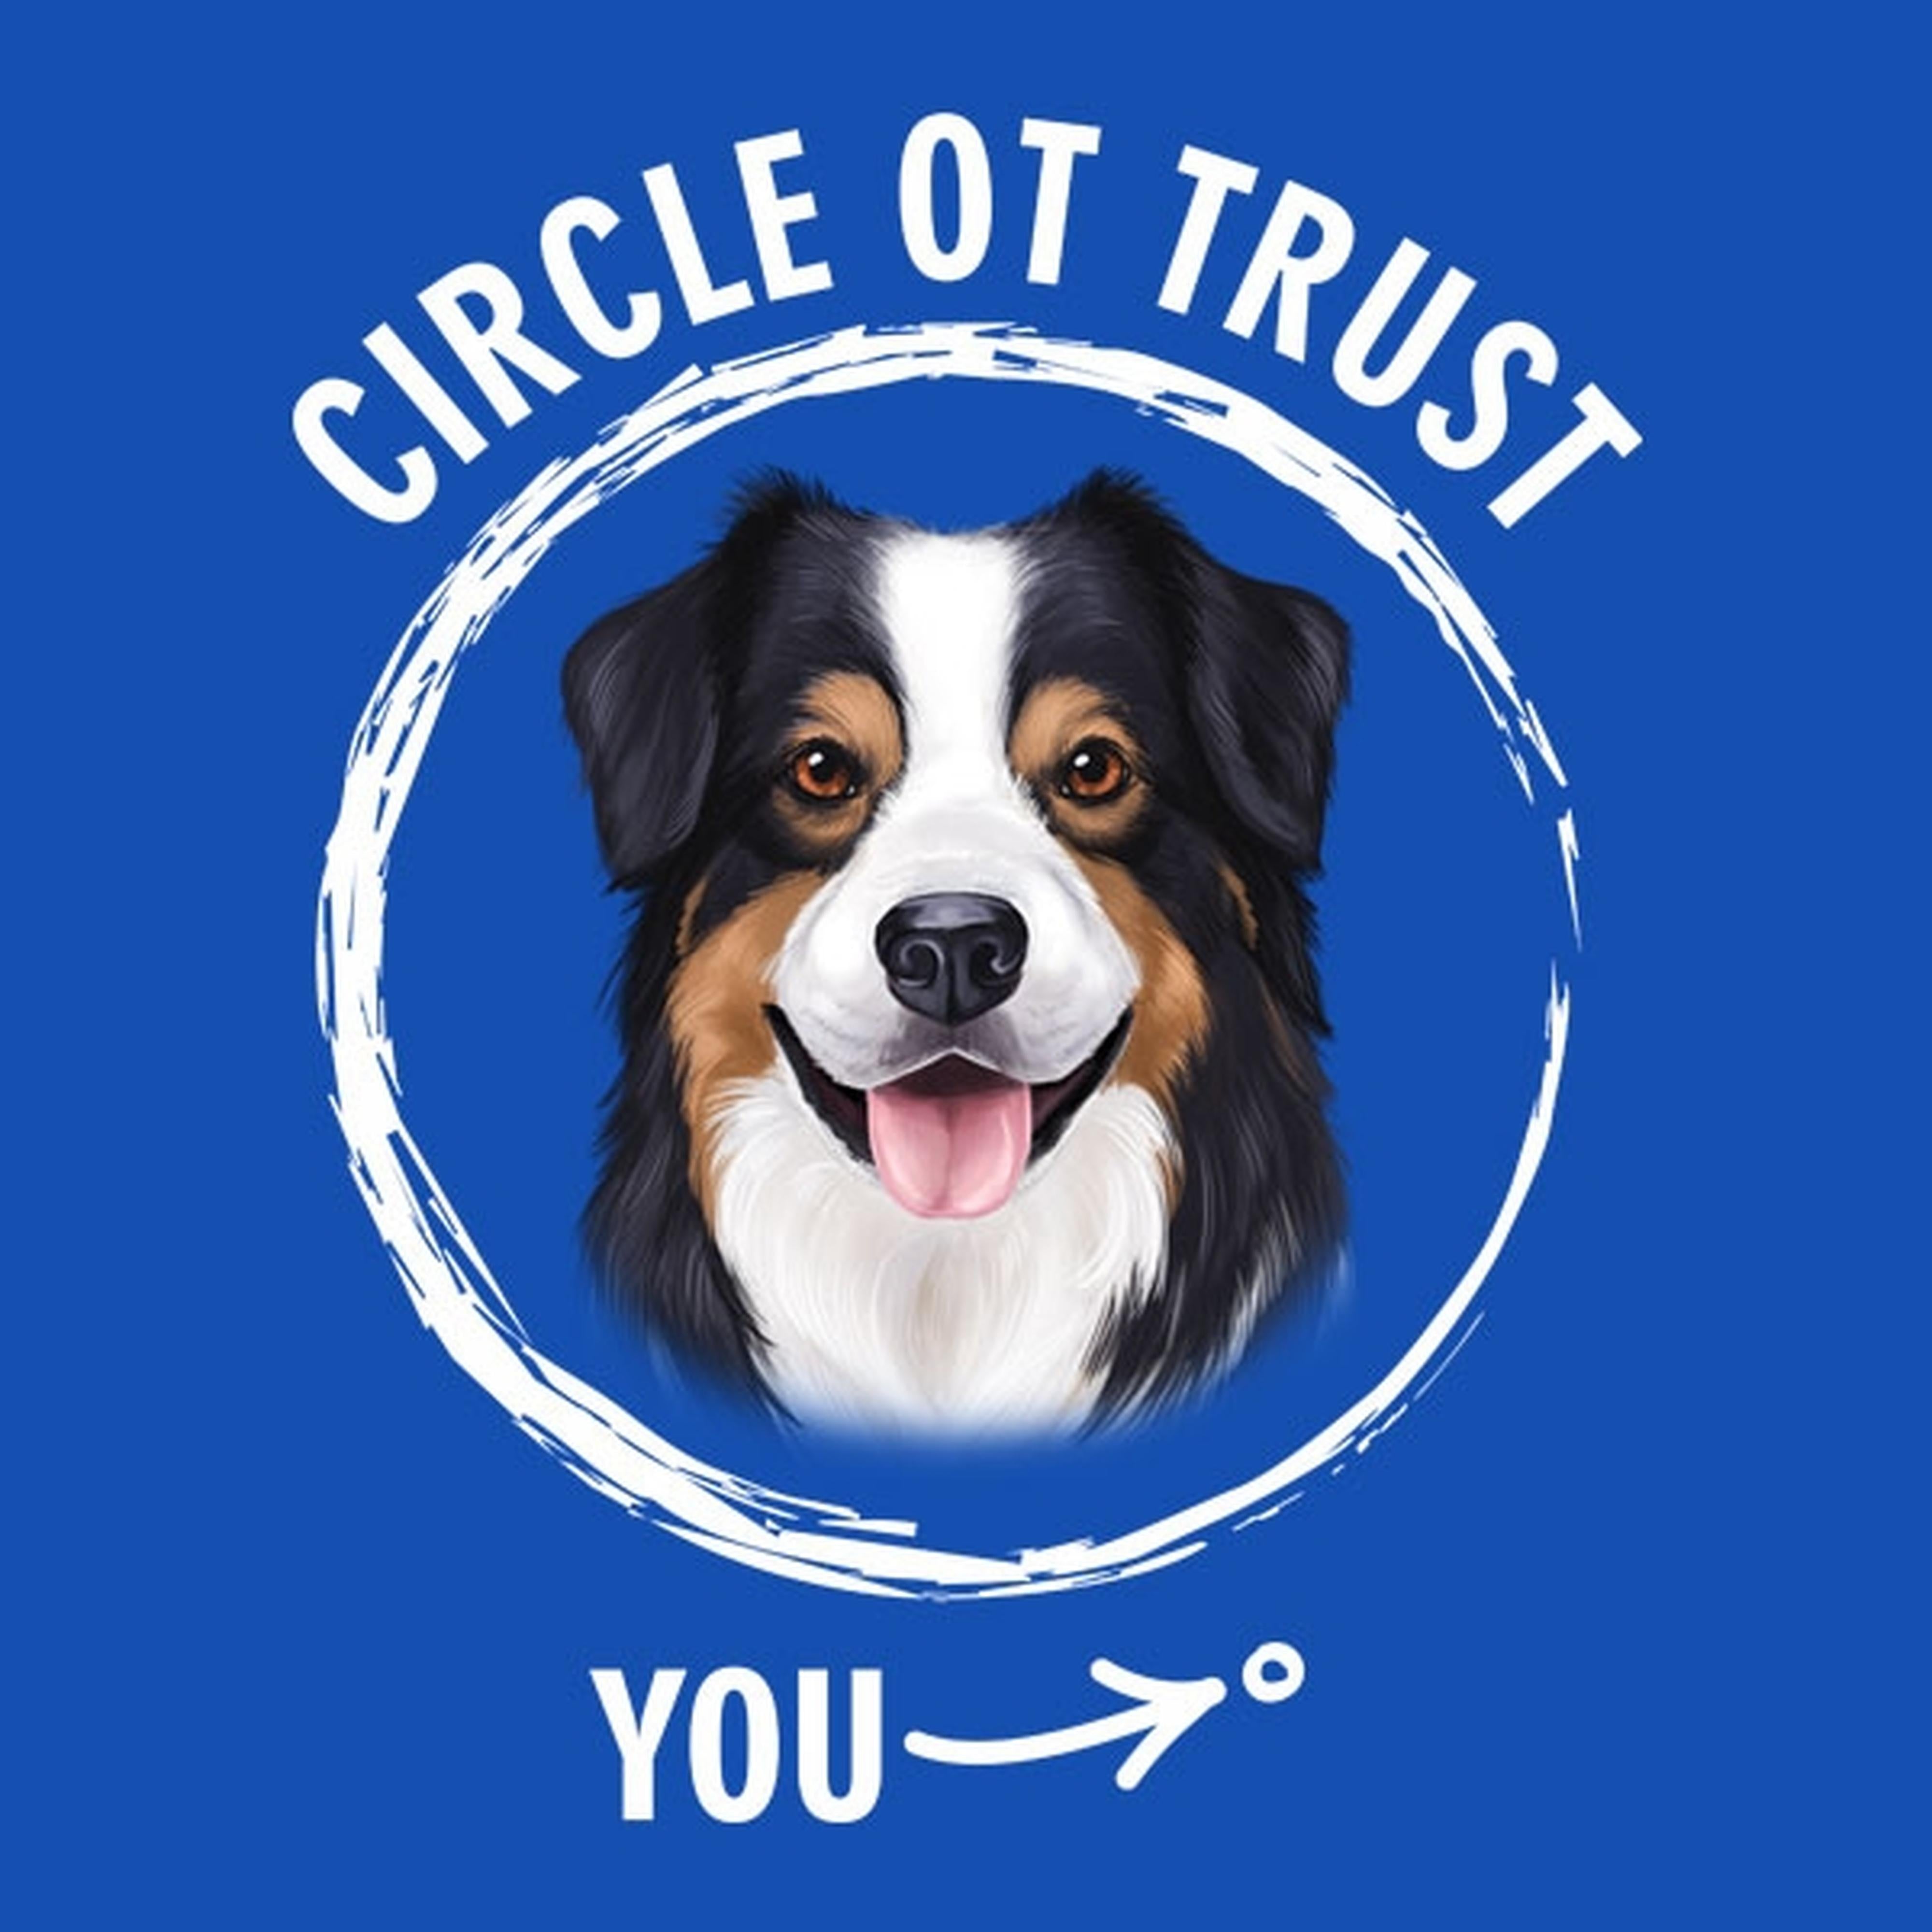 Circle of trust (Australian Shepherd) - T-shirt